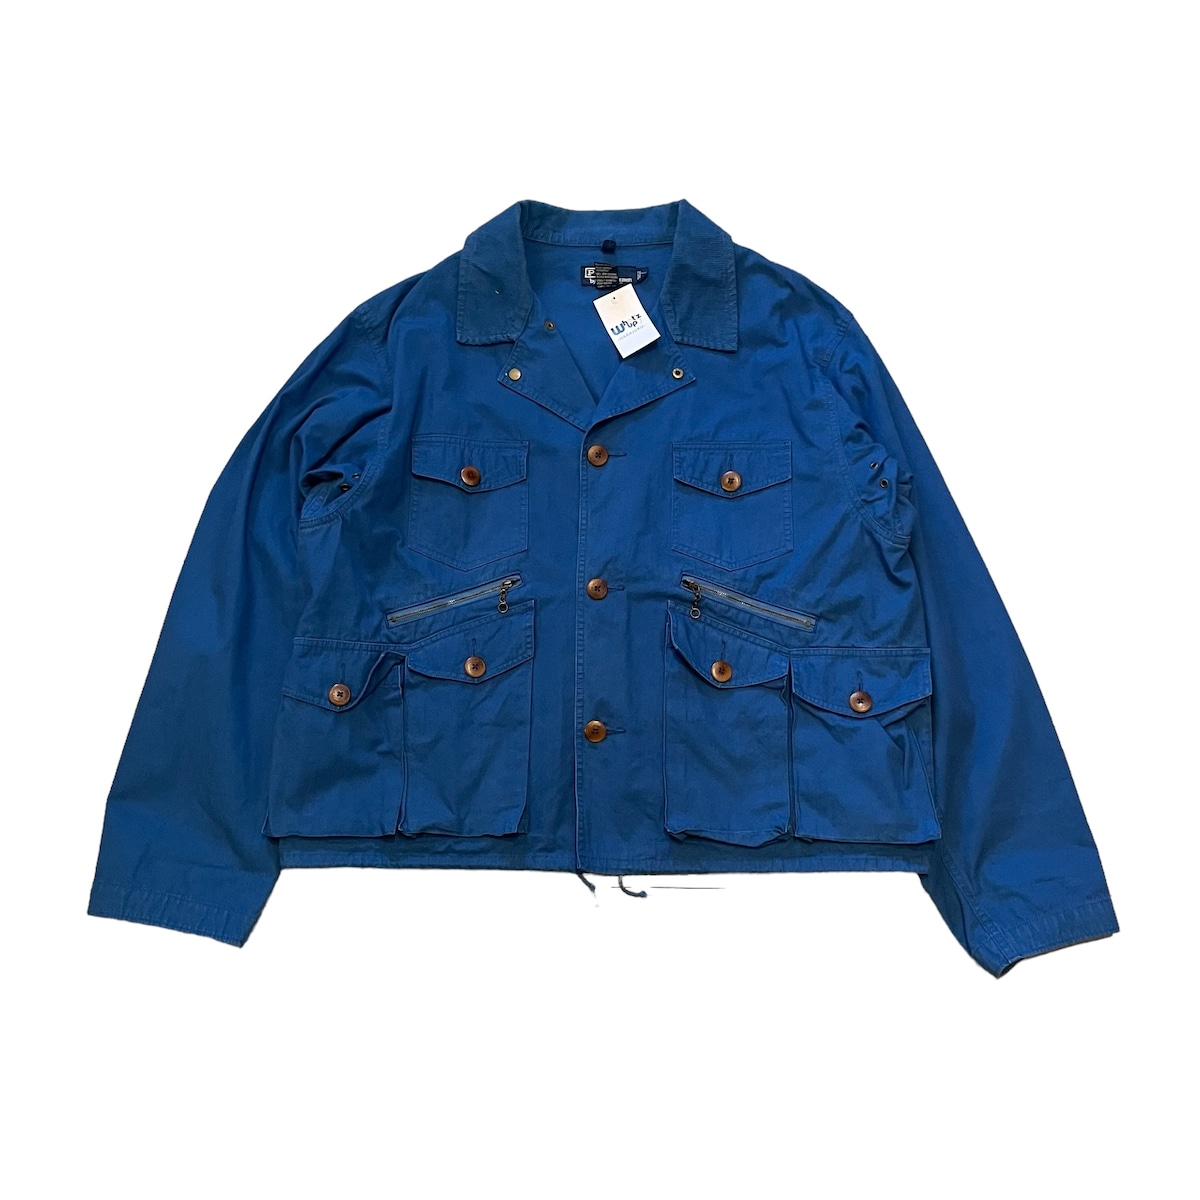 90s〜00s POLO Ralph Lauren Vintage Fishing jacket sampling